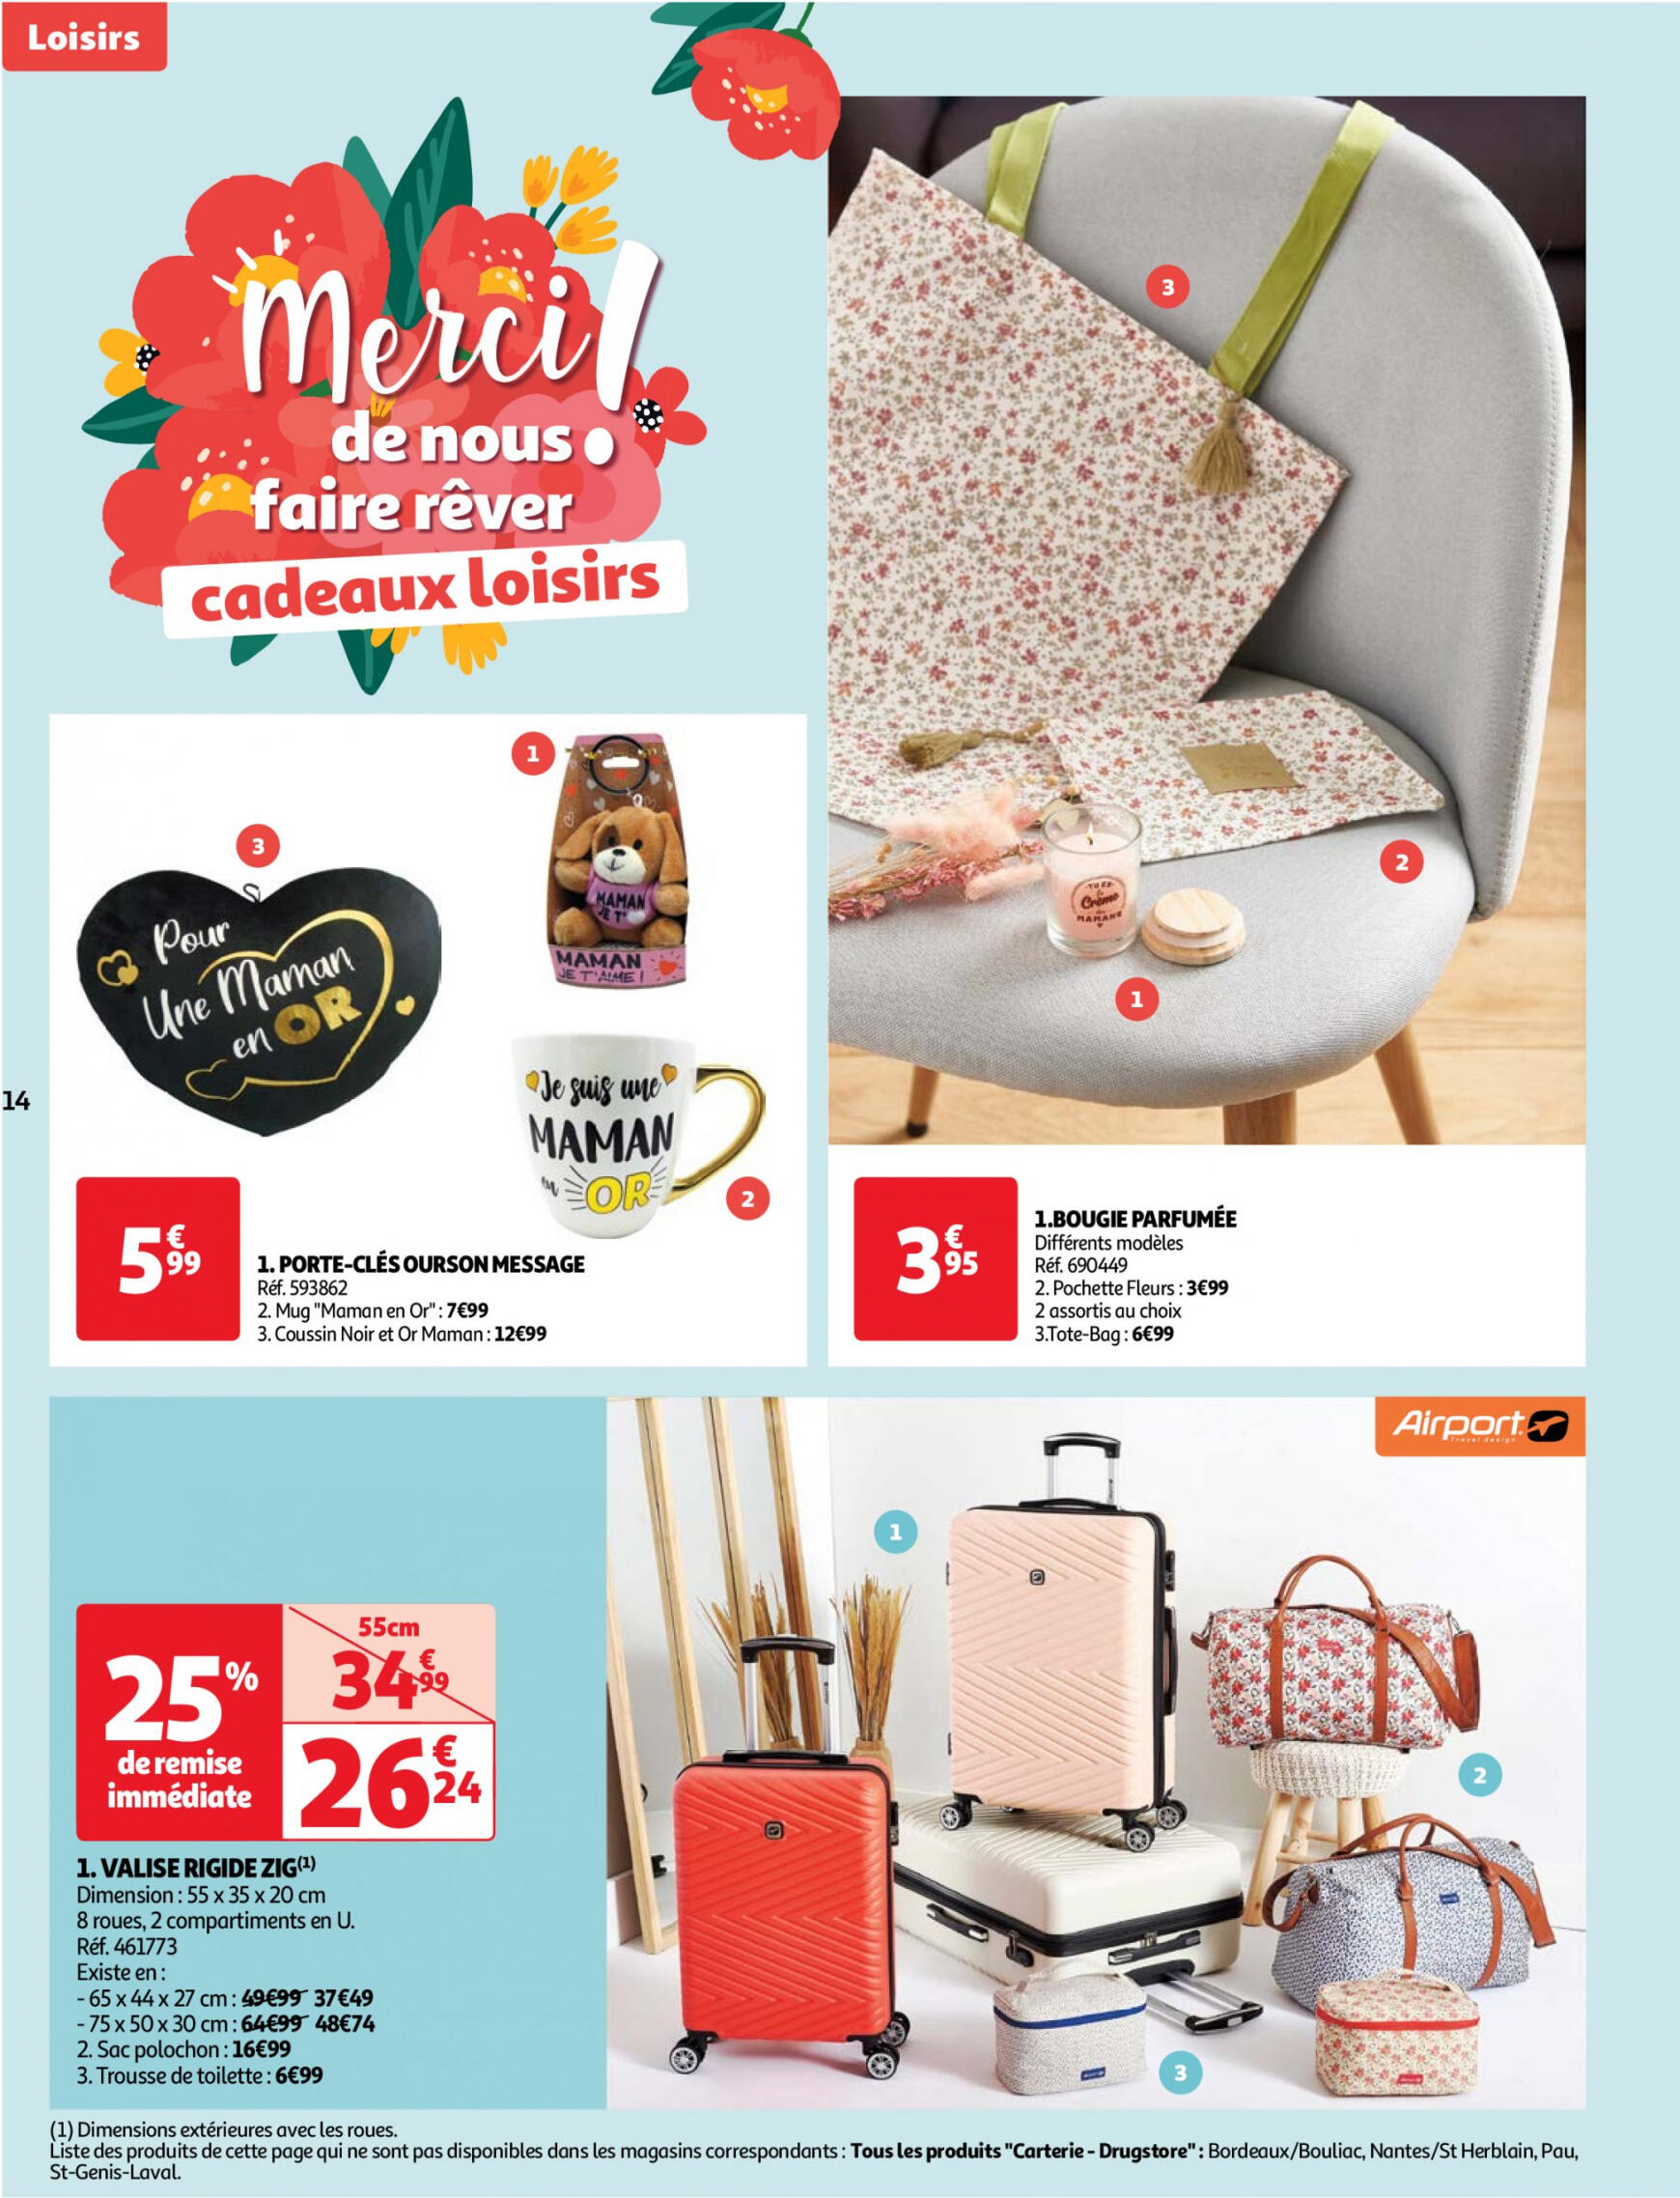 auchan - Auchan - Merci maman folder huidig 14.05. - 26.05. - page: 14